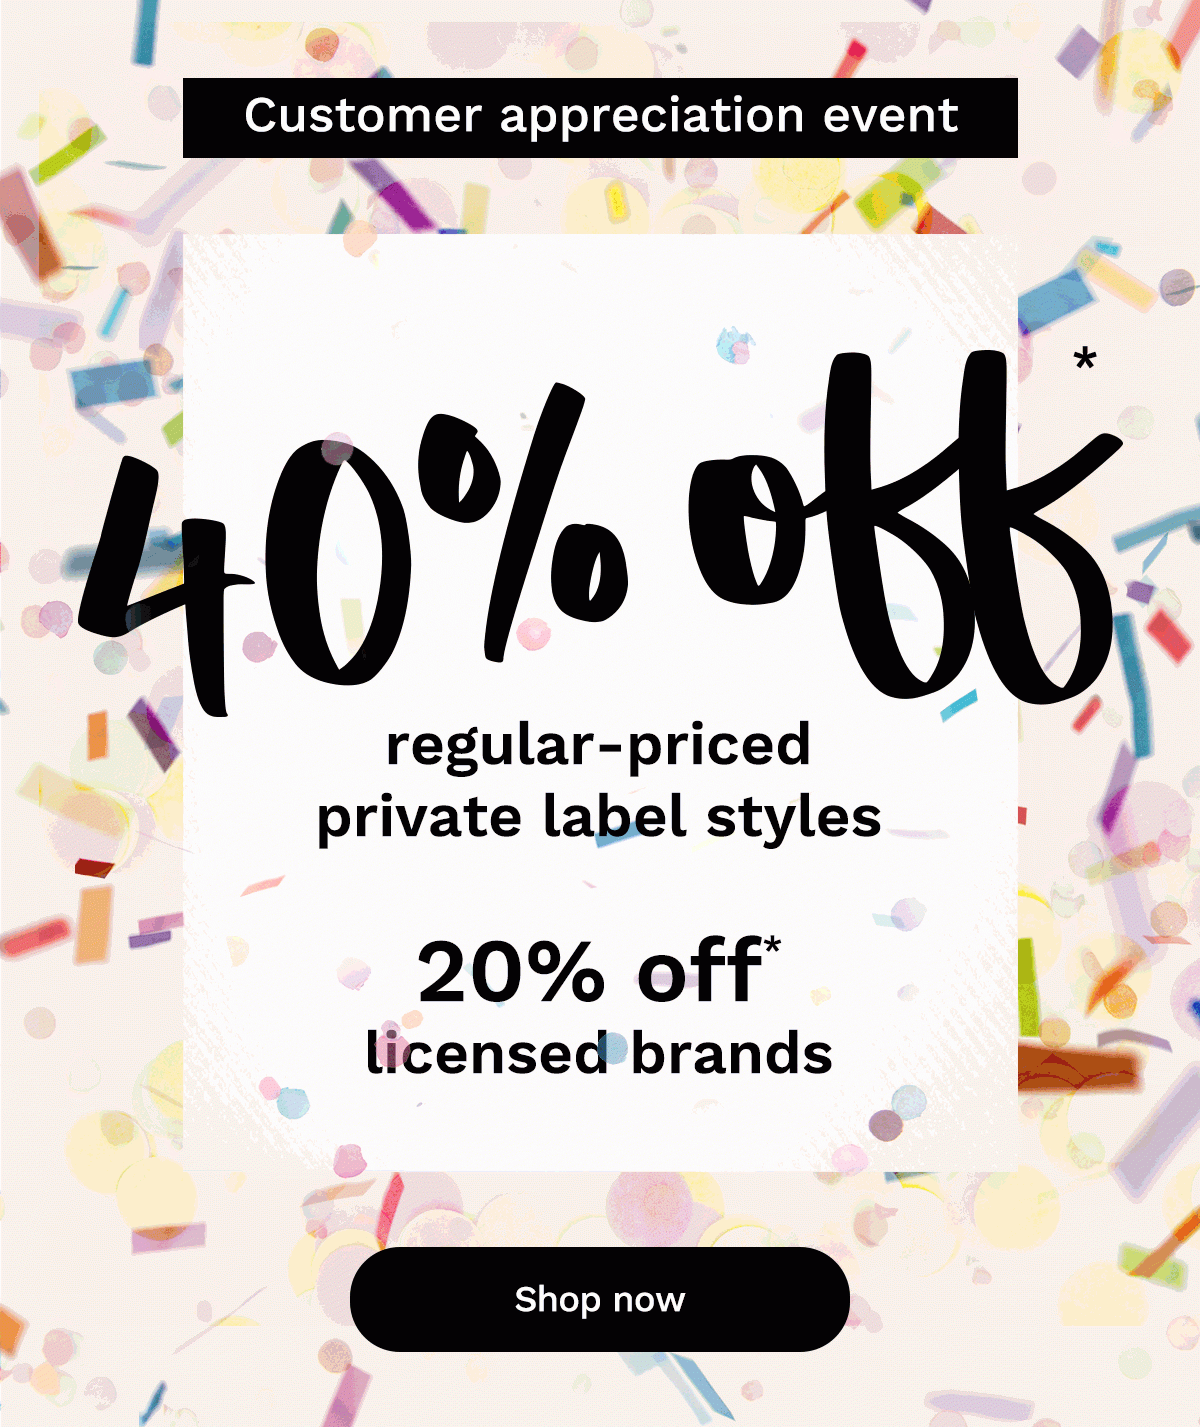 Starts now! Until September 20 Customer appreciation event 40% off* regular-priced private label styles 20% off* licensed brands